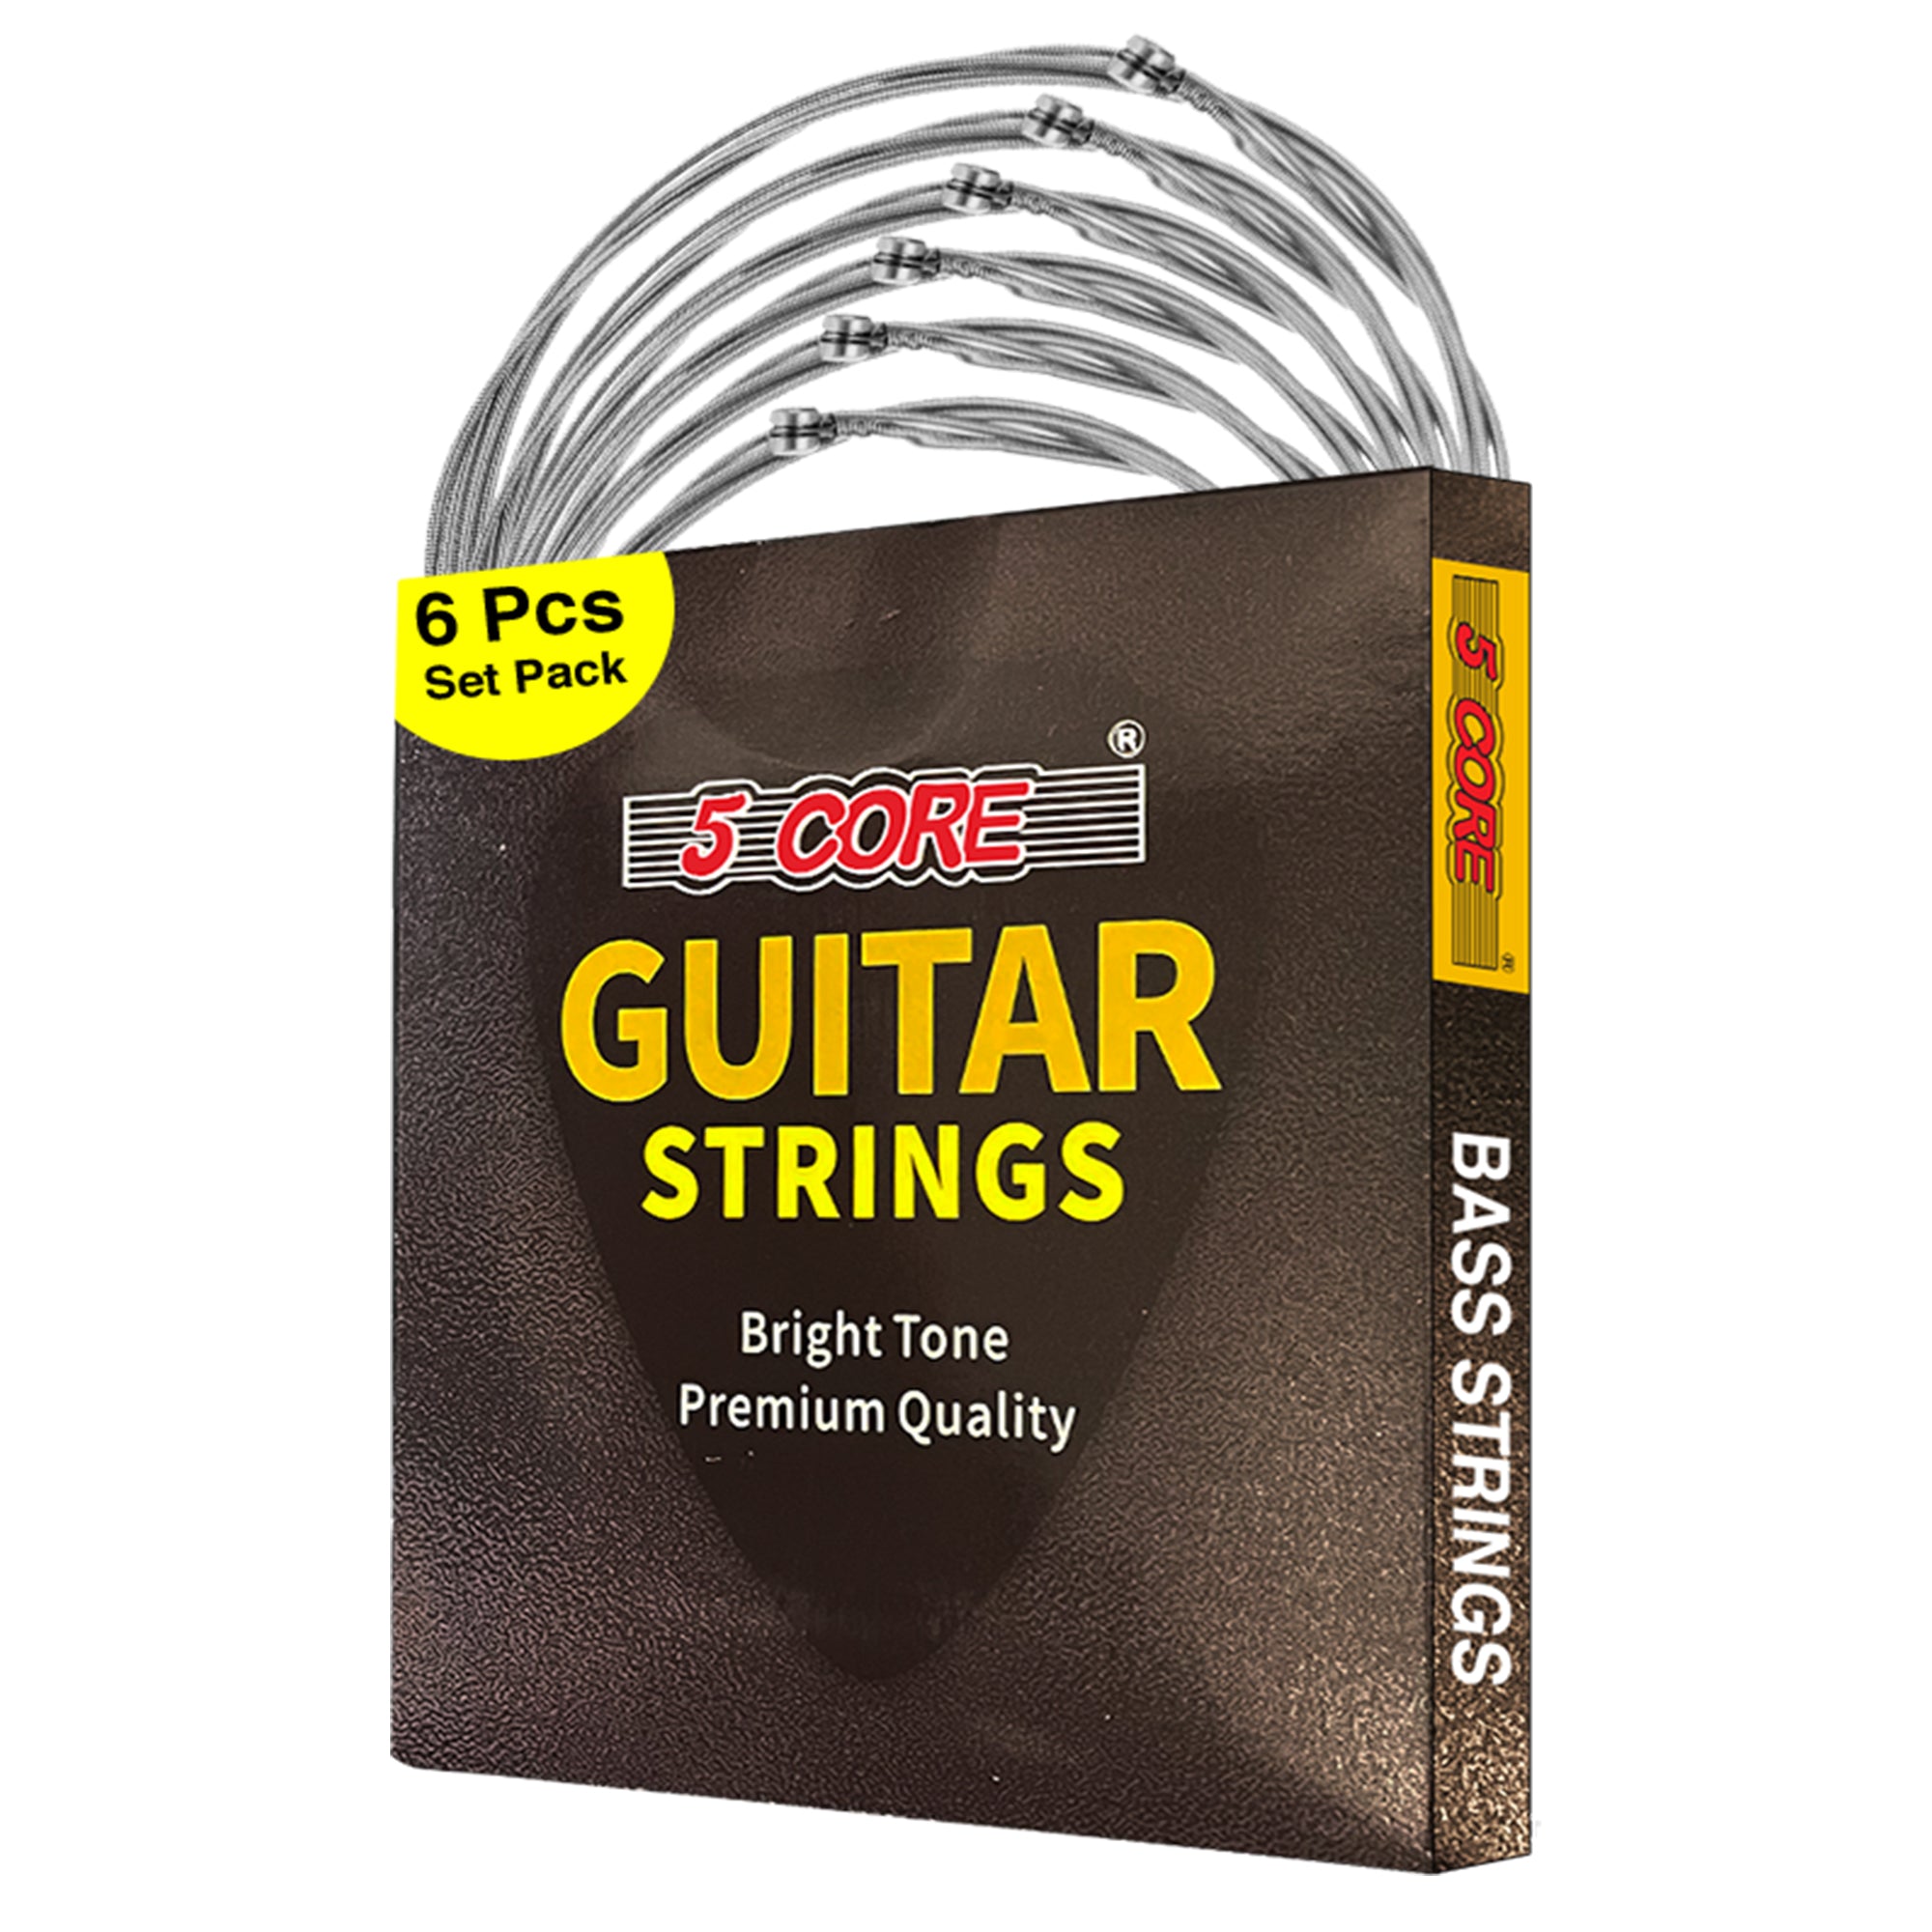 5 Core Bass Electric Guitar Strings Pure Nickel Guitar String Gauge .010 to .048 - GS EL BSS 6PCS